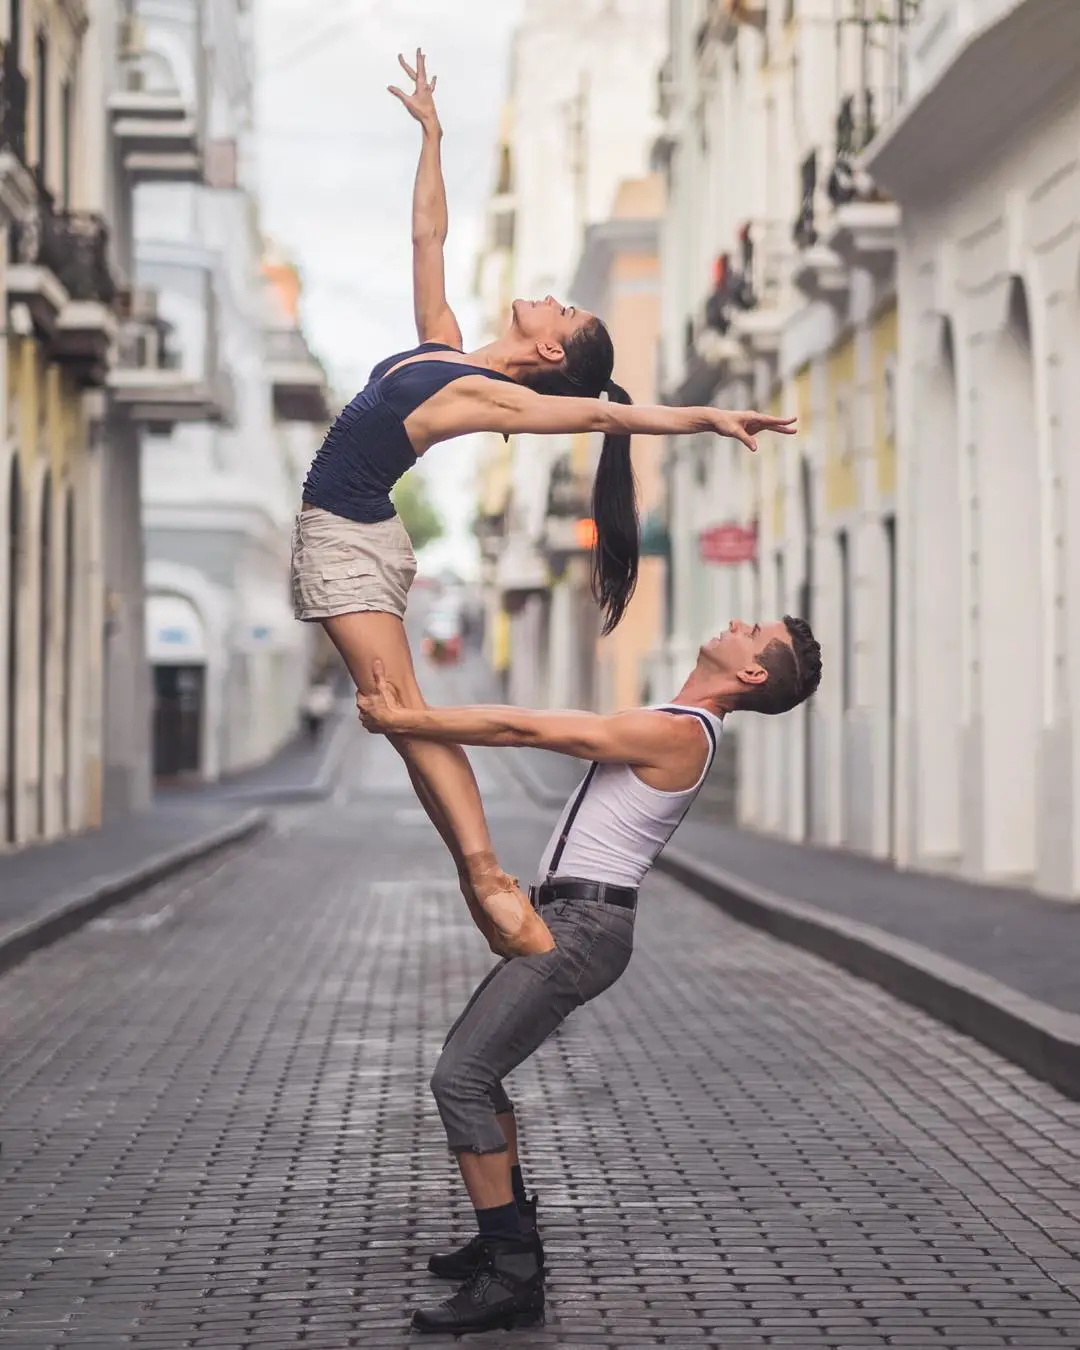 Dancers Laura Valentin & Daniel Saez ©omar z. robles